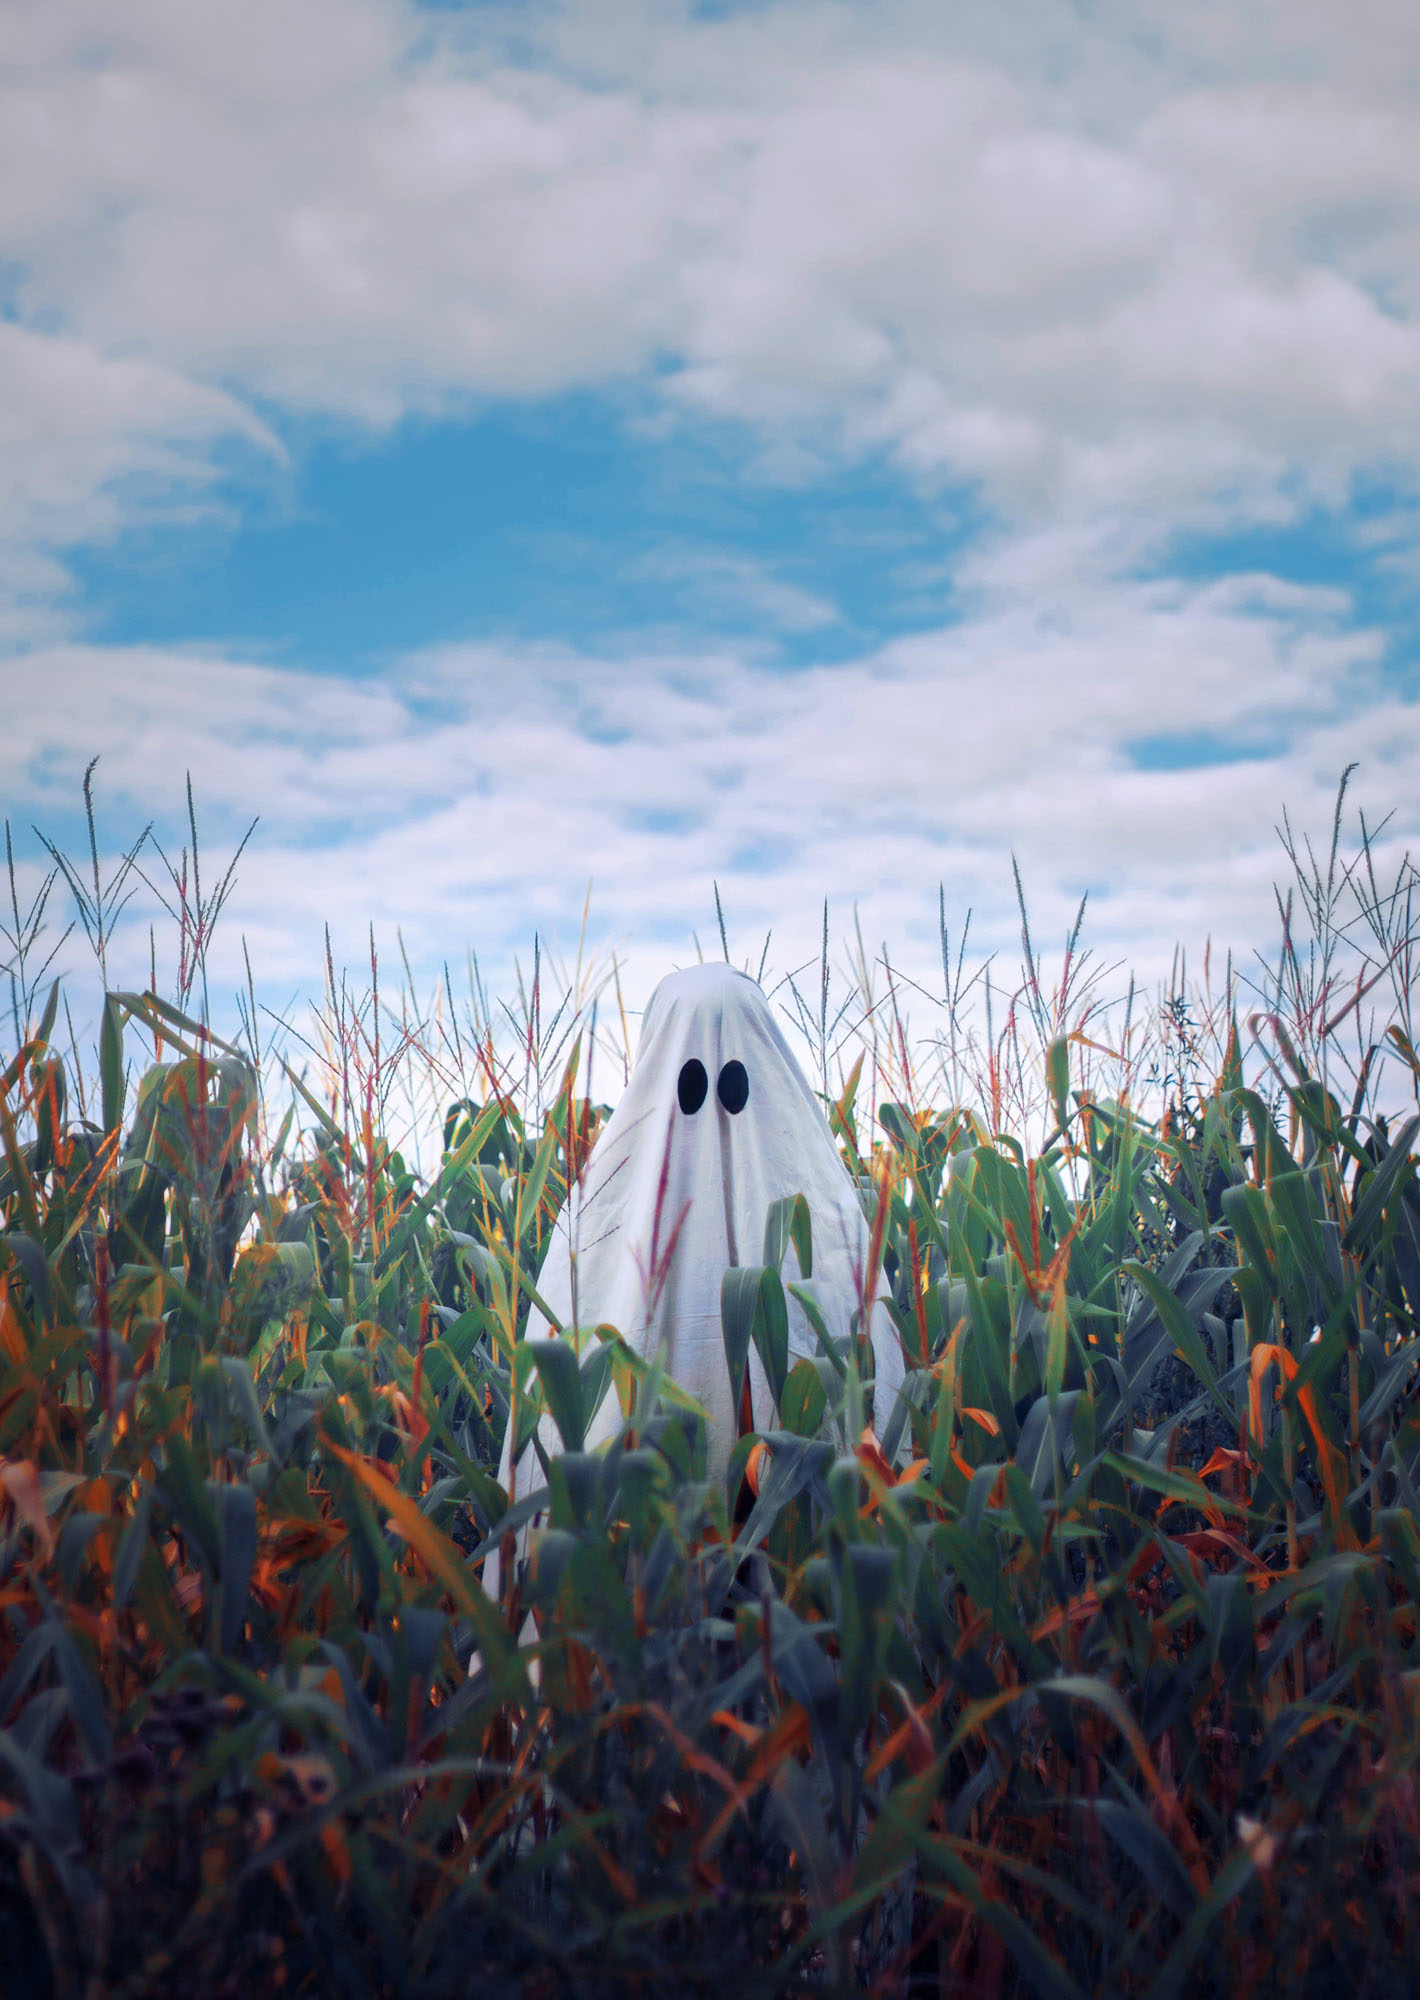 Corn ghost